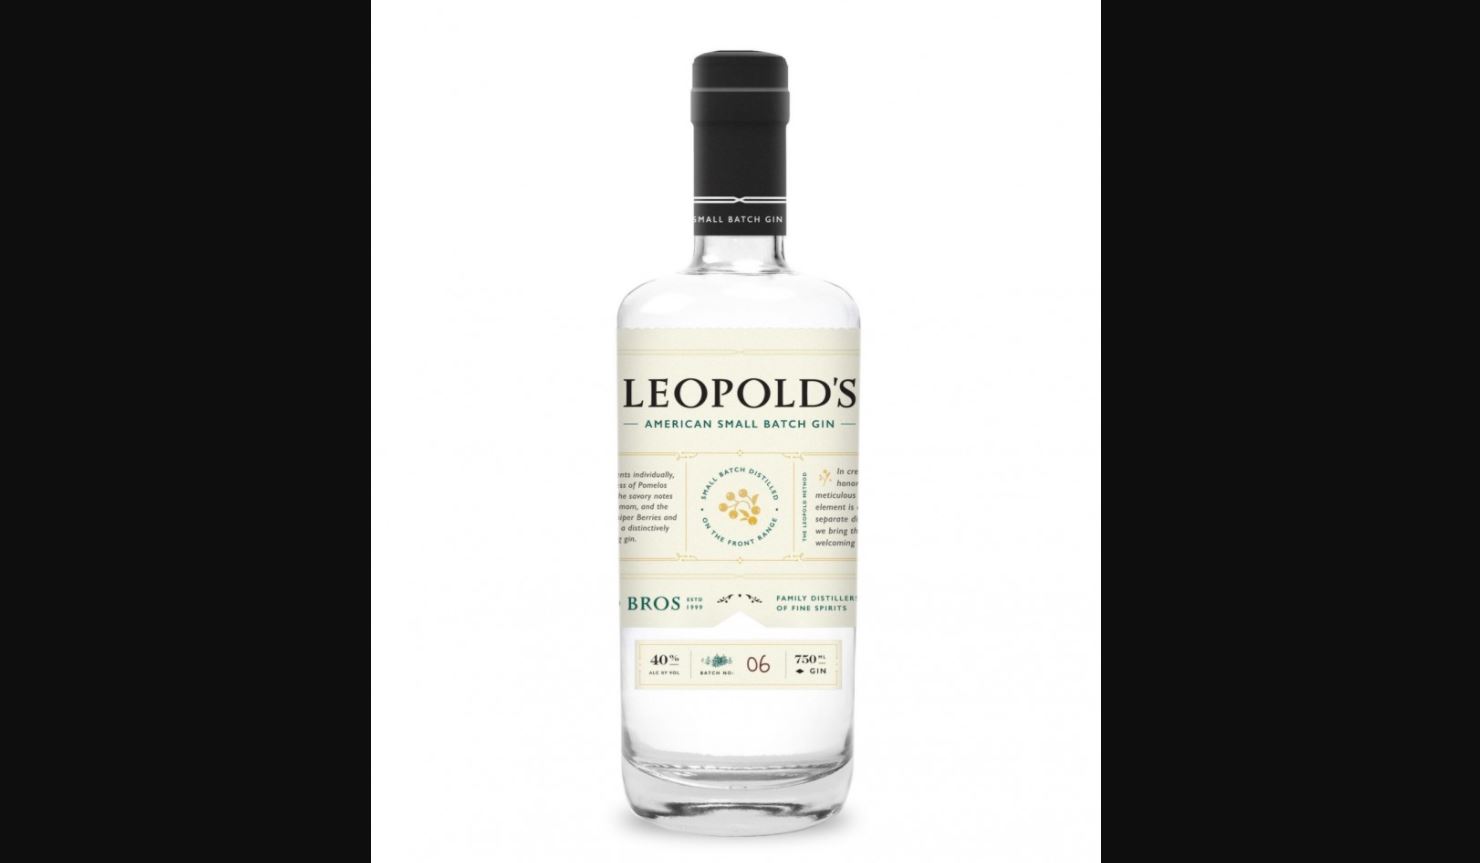 Leopold’s American Small Batch Gin